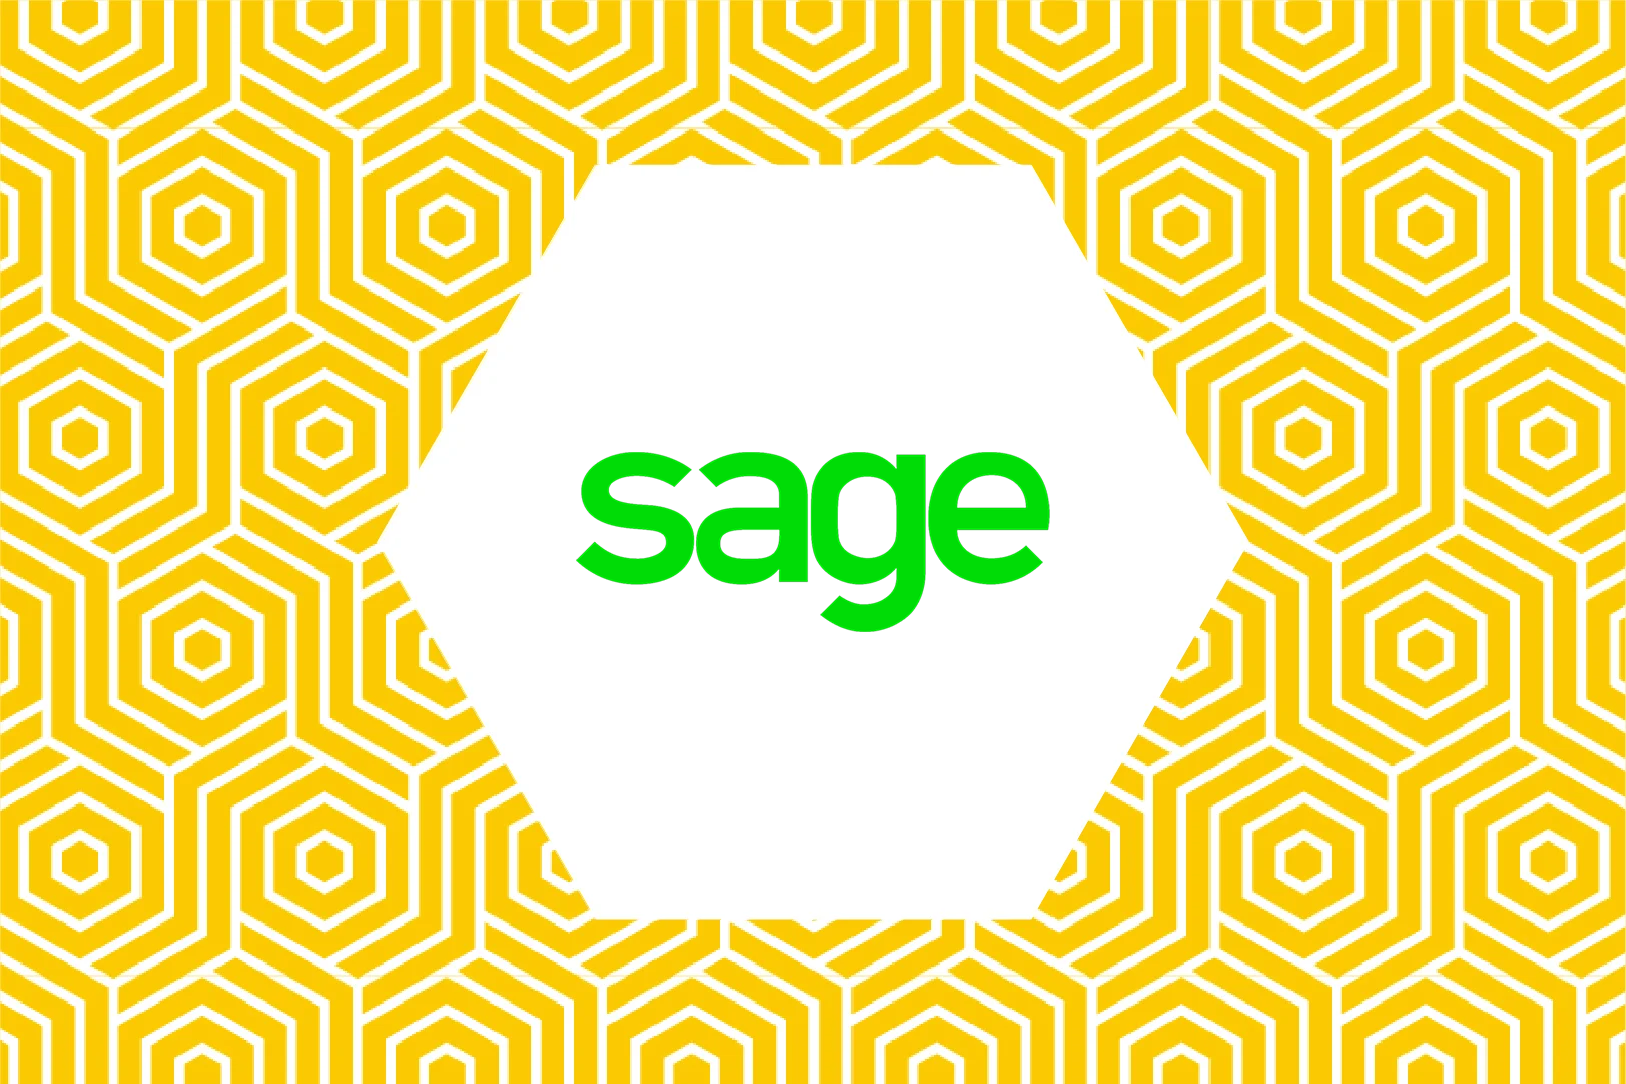 Sage Website Case Study Image Resized (Smaller)